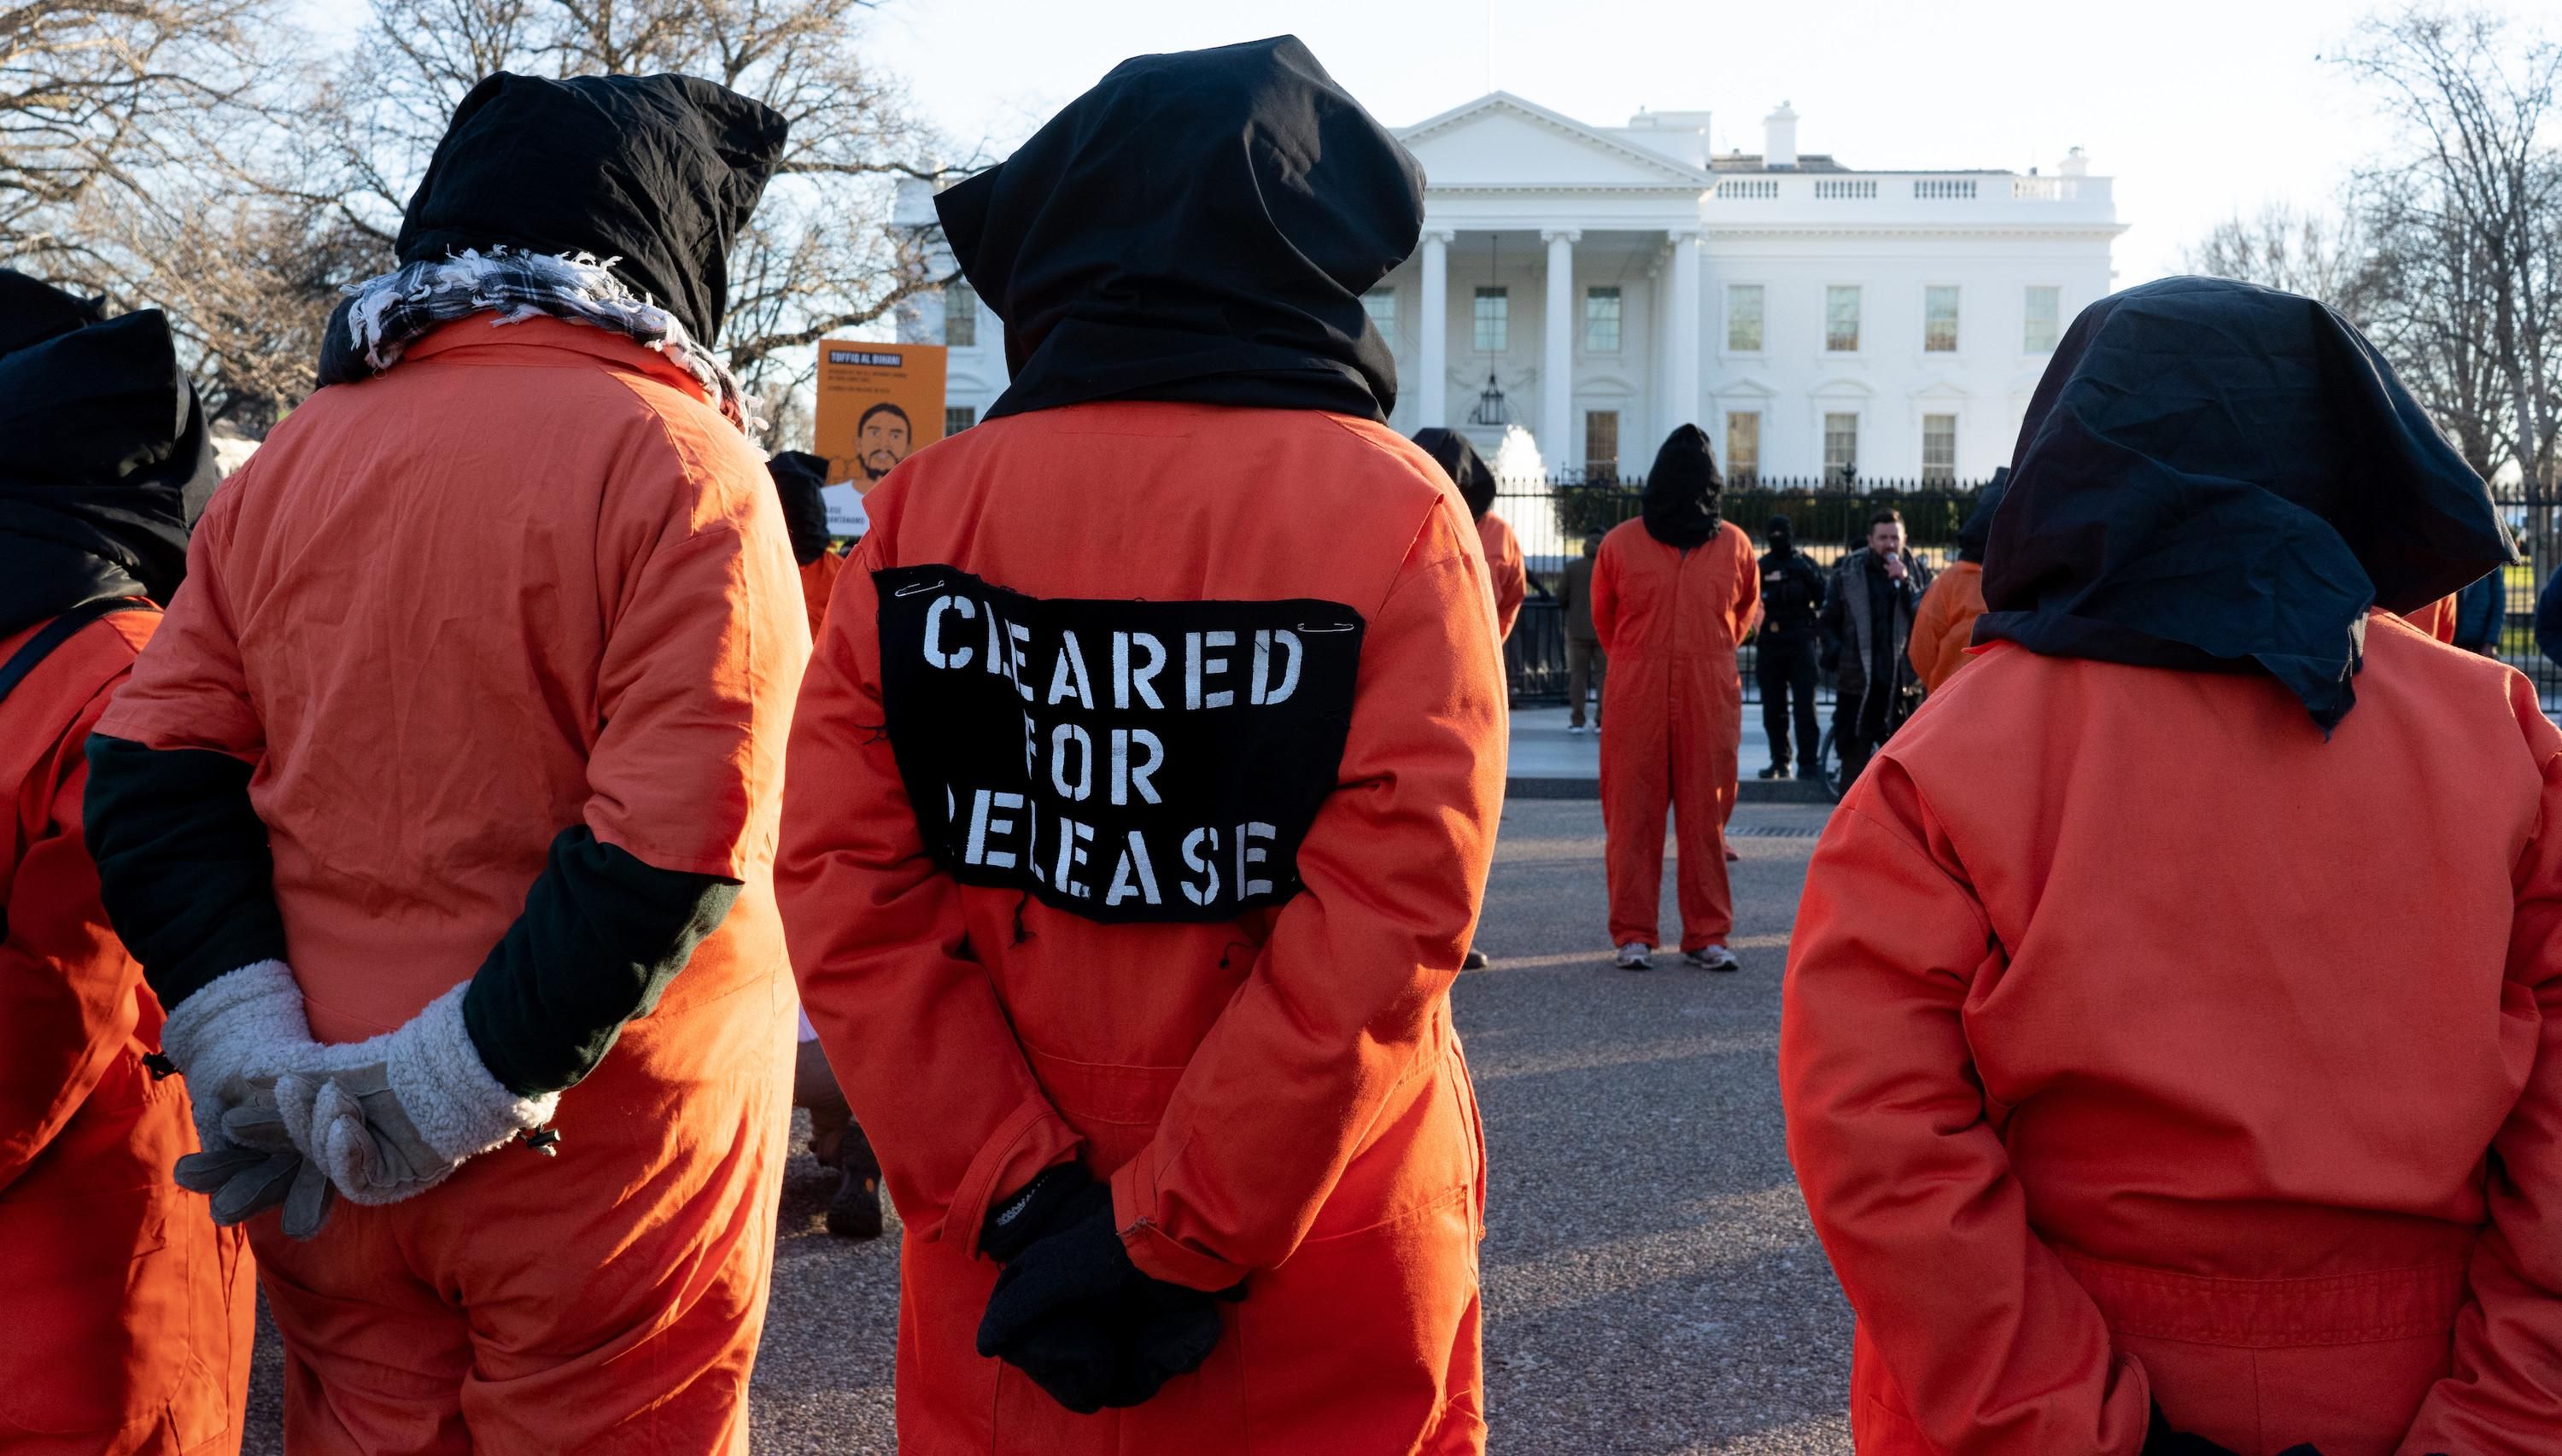 Protesters denouncing Guantanamo prison outside White House